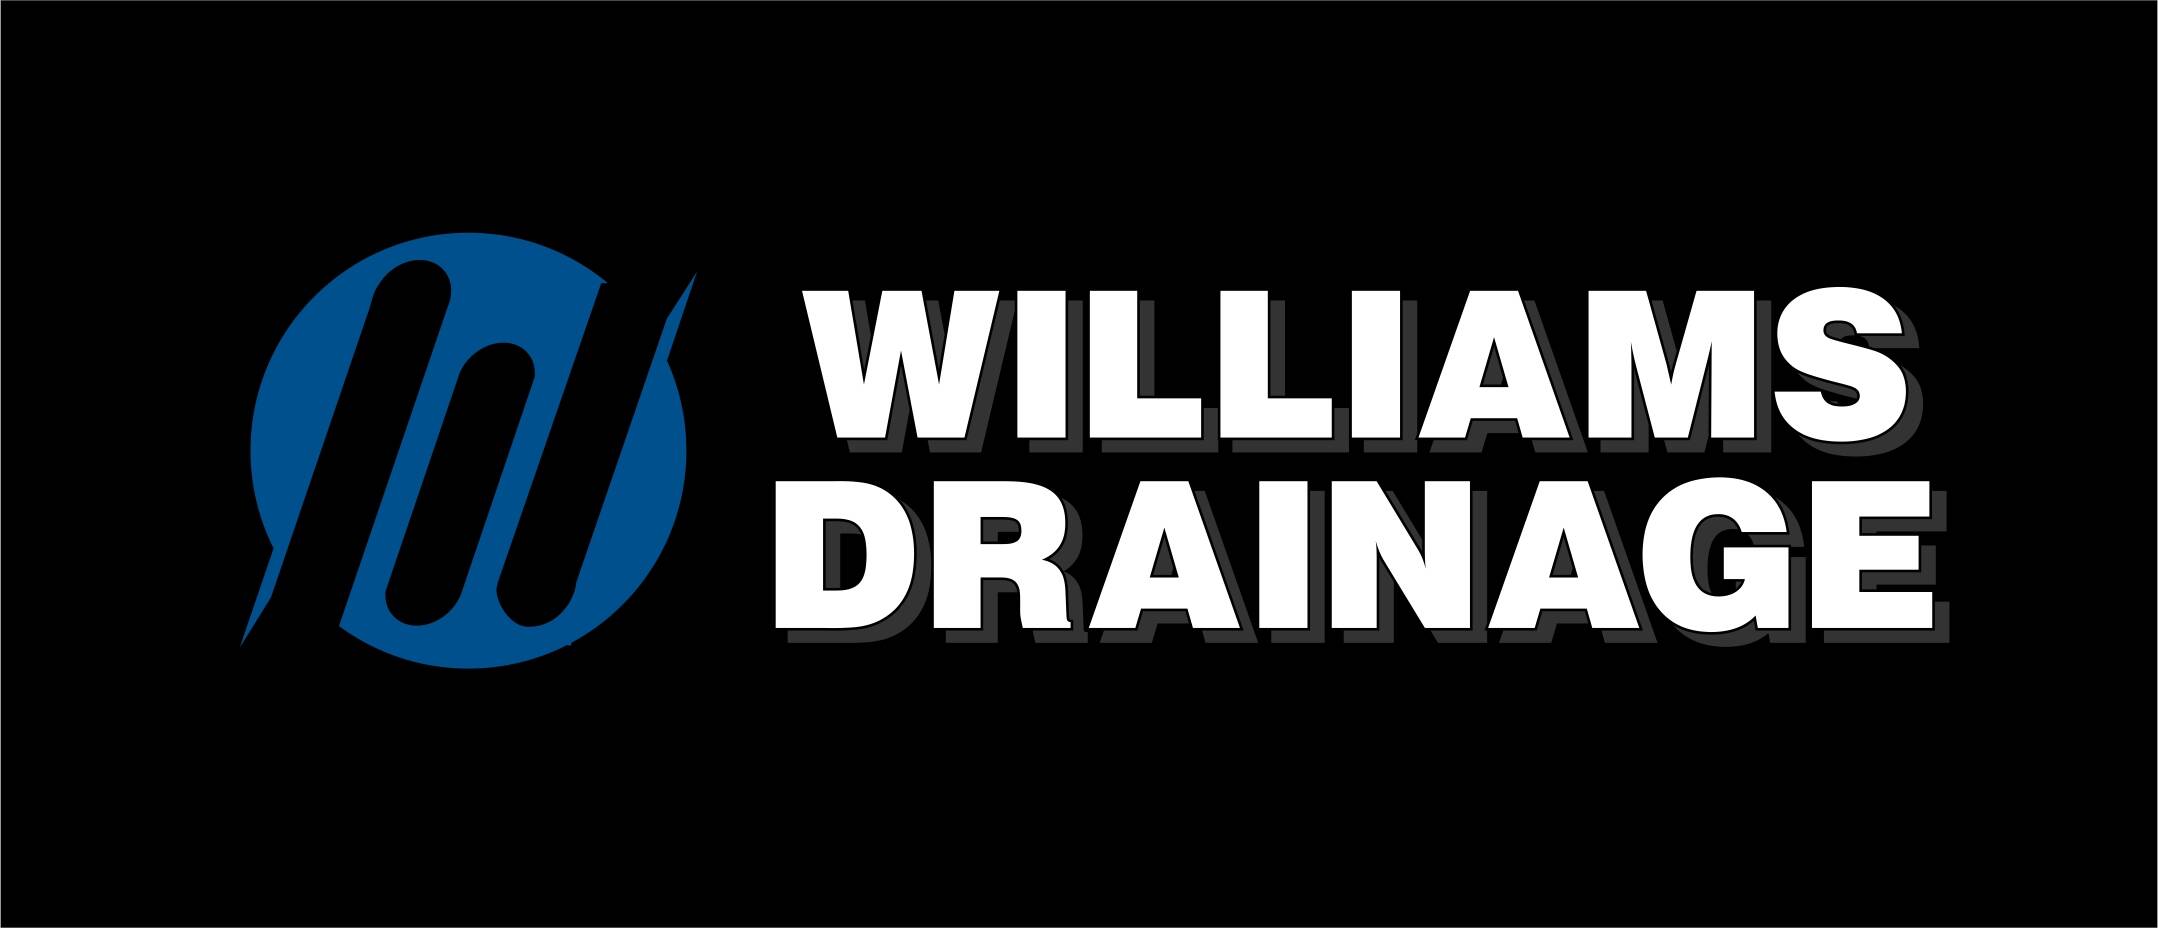 Williams Drainage